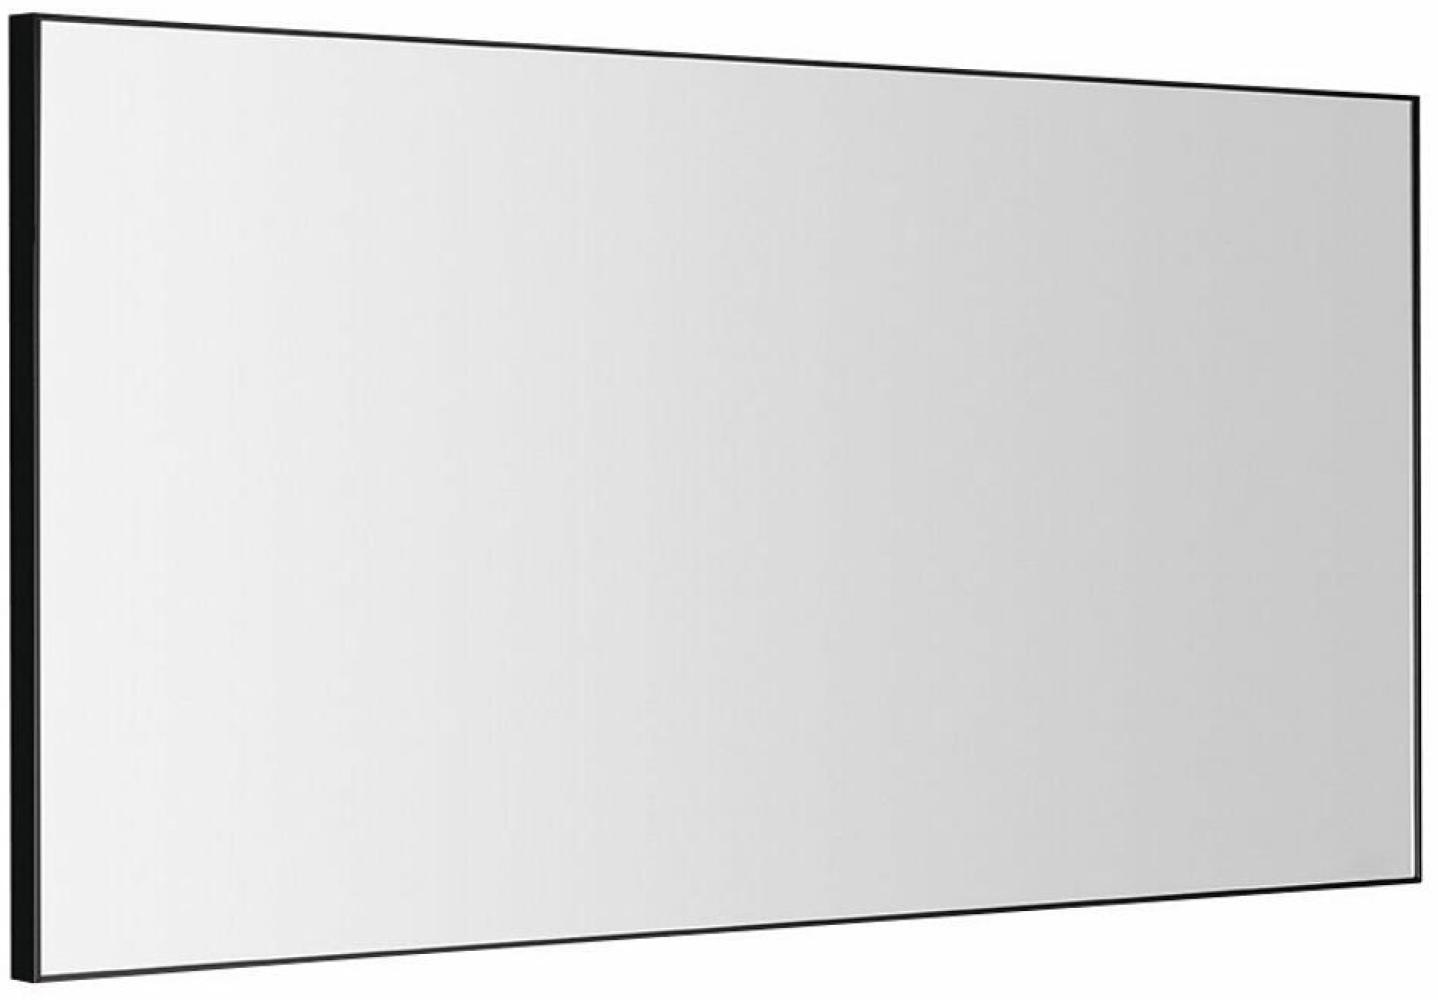 AROWANA Spiegel mit Rahmen, 1200x600mm, schwarz Bild 1